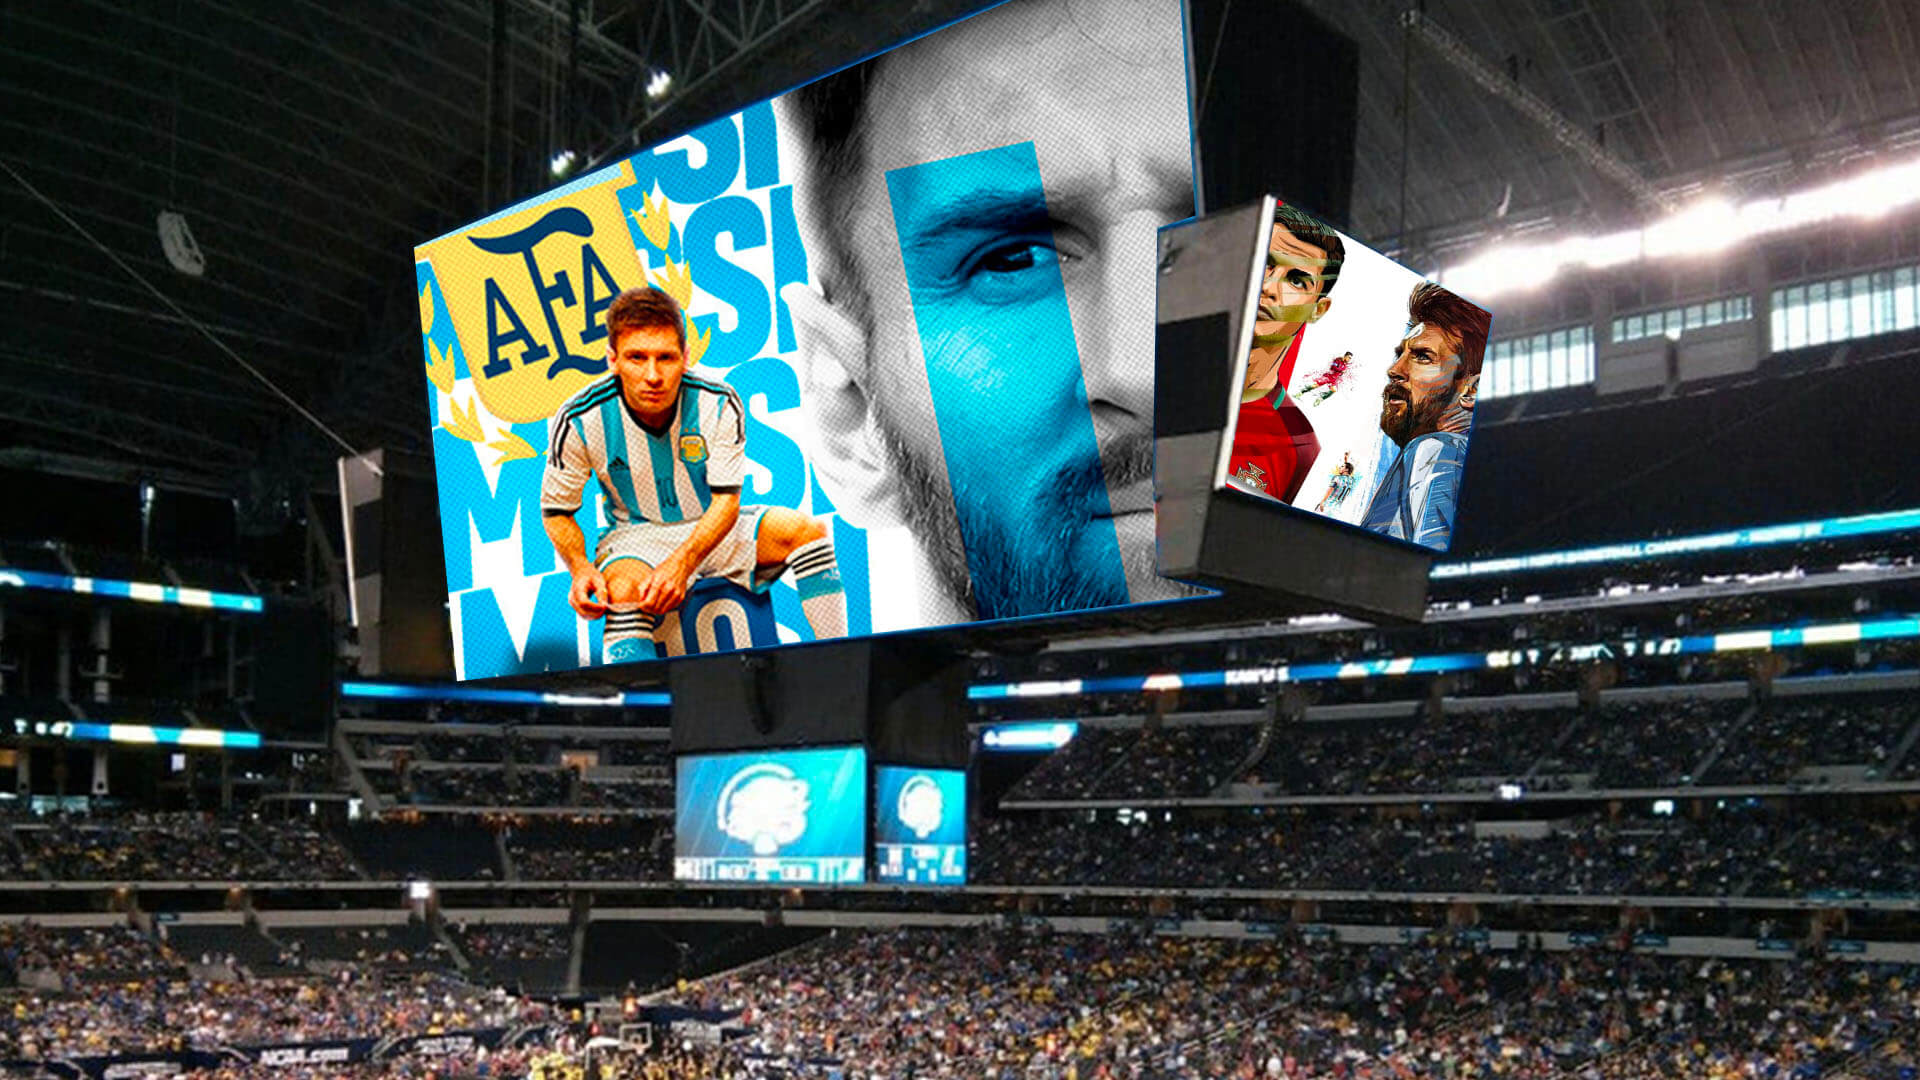 Fan art showcased on a digital signage screen at a stadium